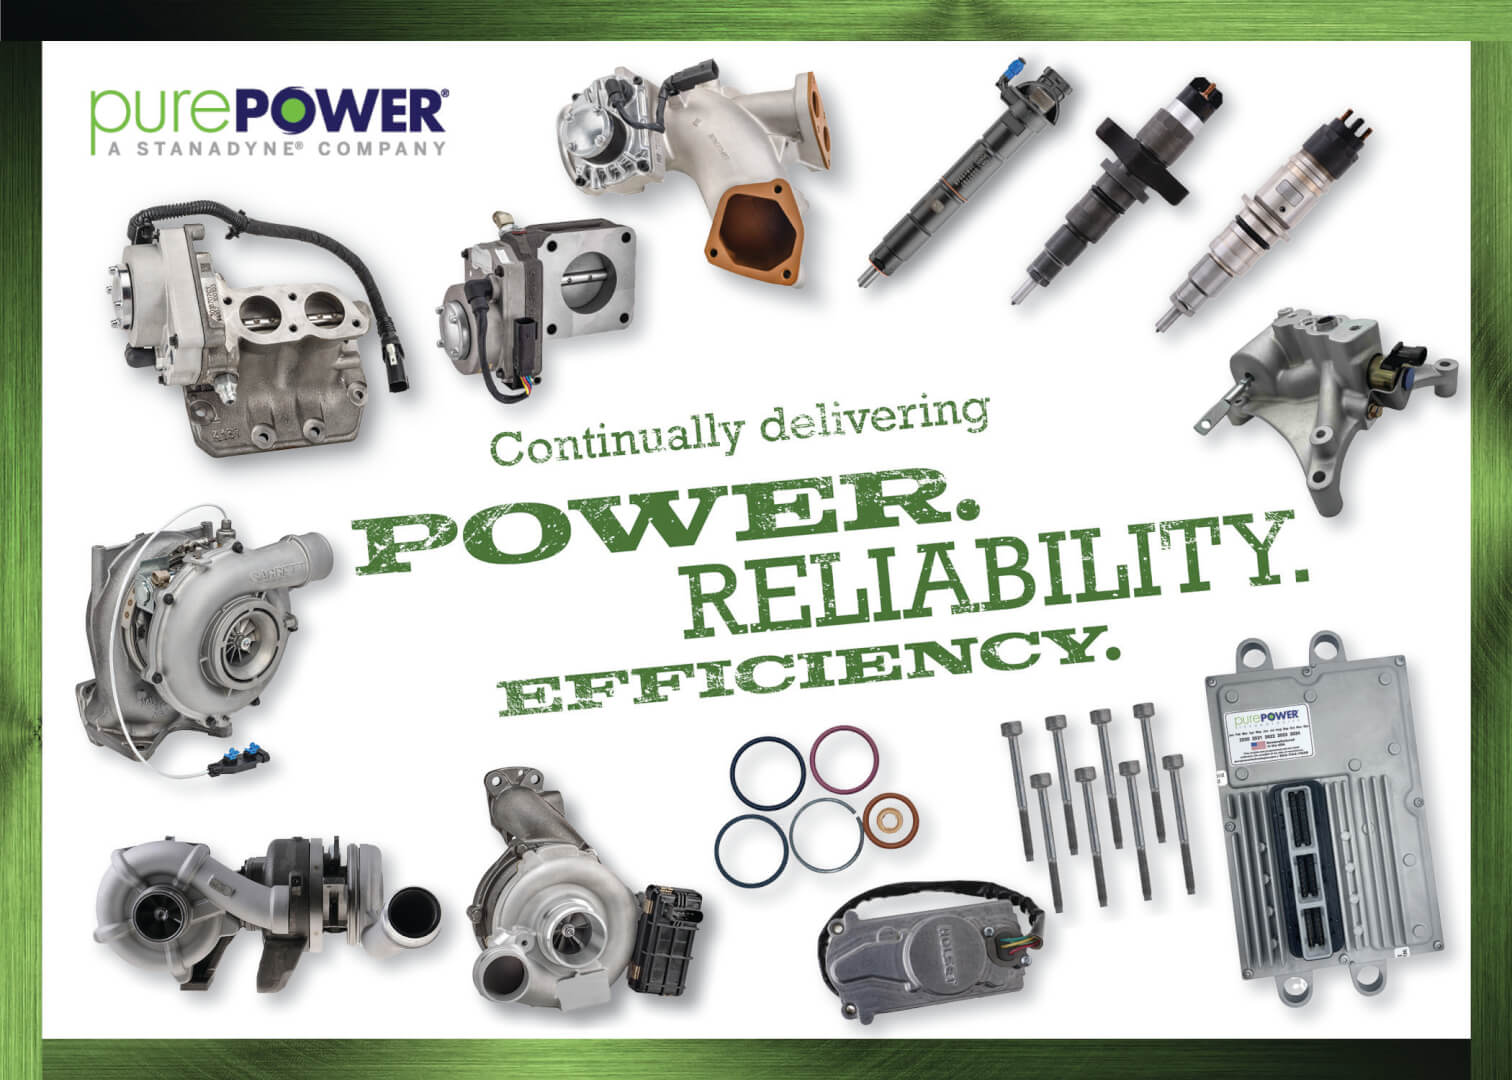 PurePower Technologies